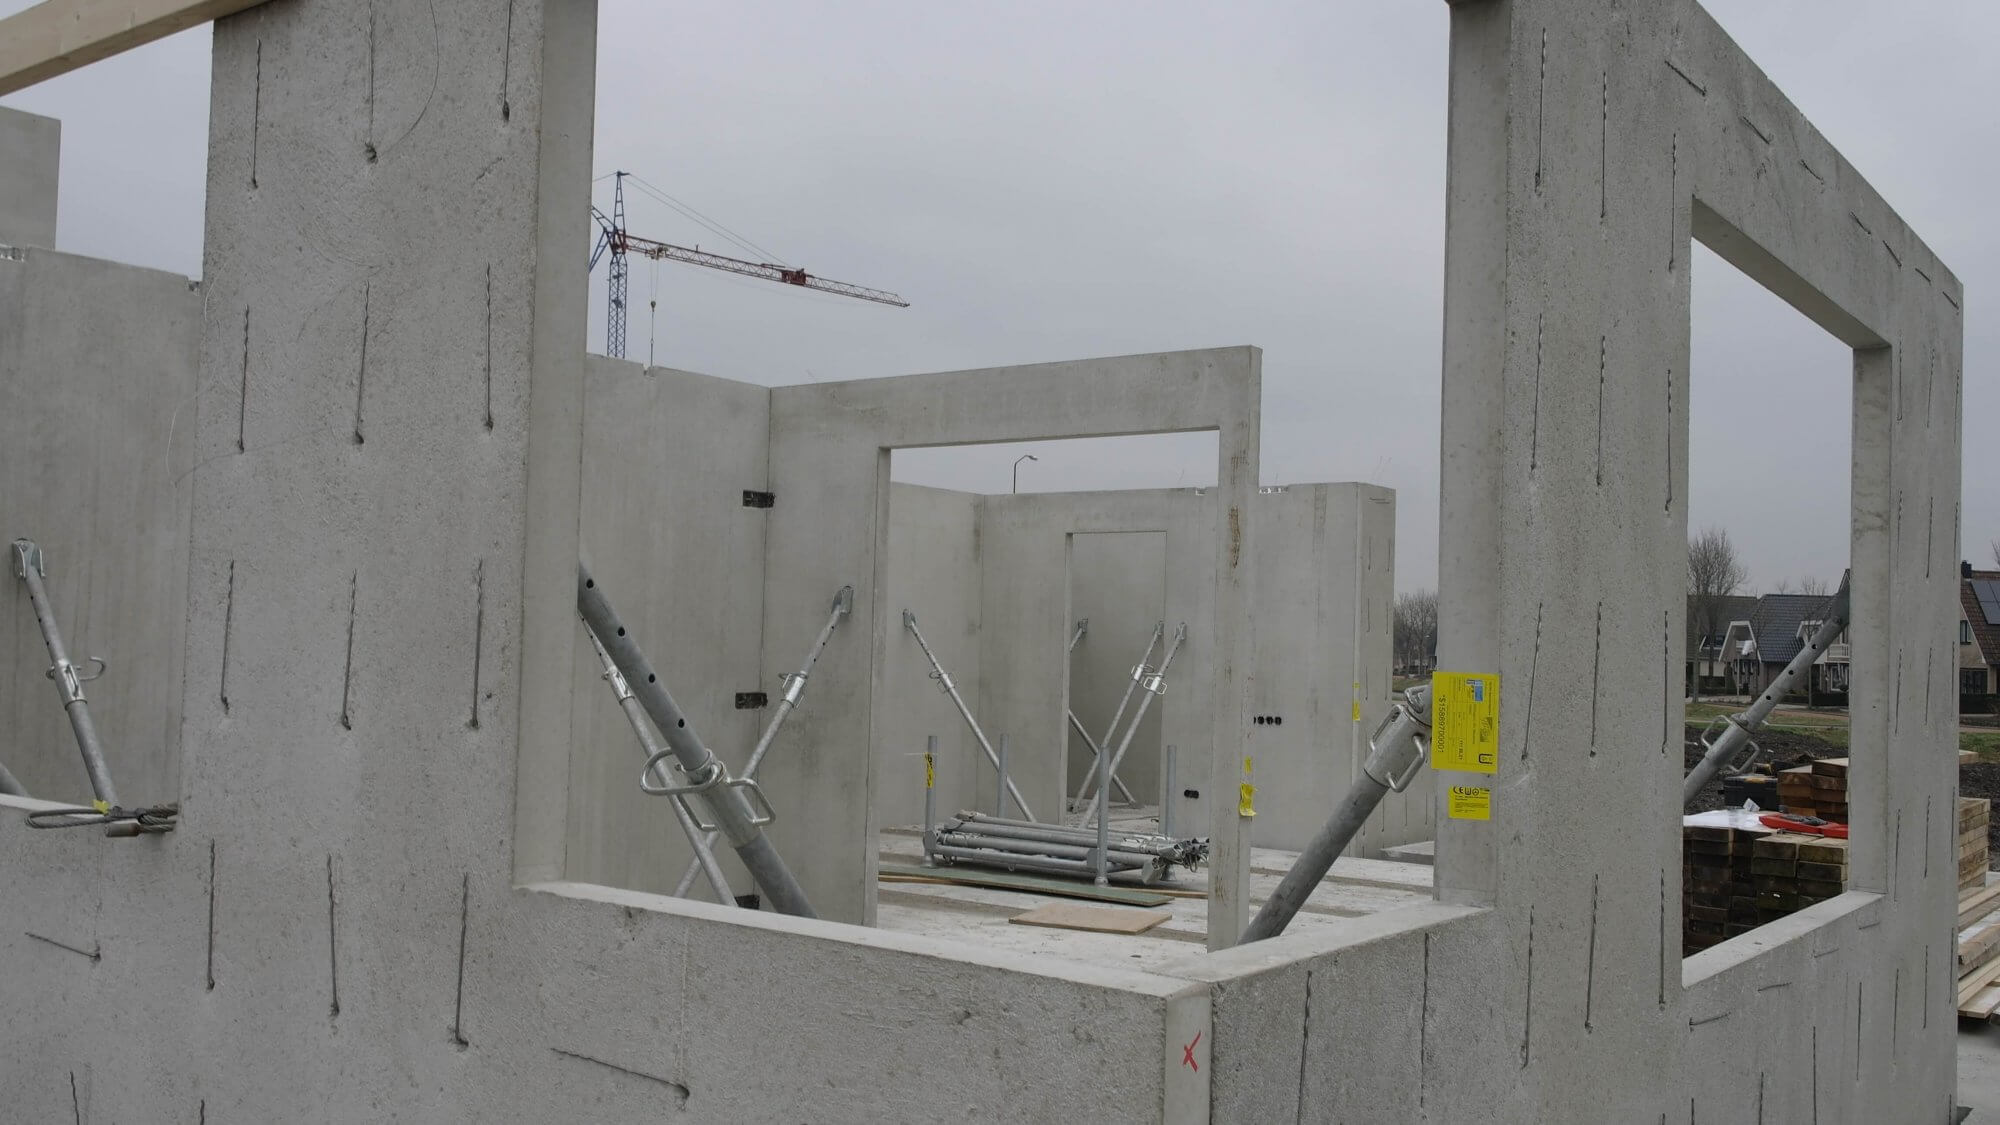 building-supply-prefab-betonwanden-montageservice-beton-genemuiden